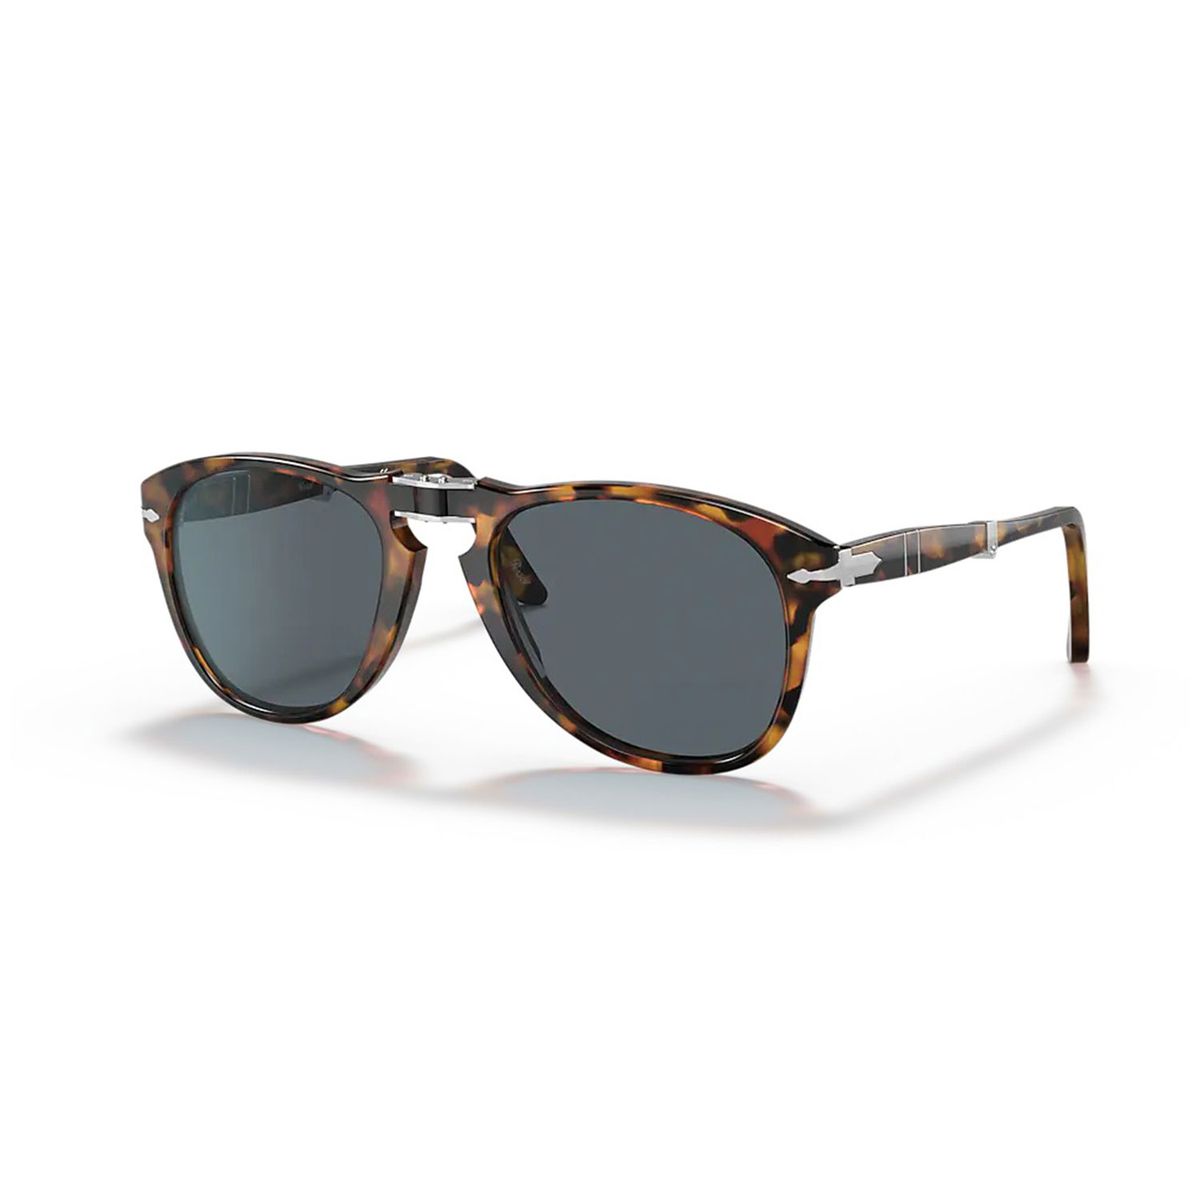 Wooden Sunglasses Fashion Travel Sunglasses,Mens and Womens FFQNG Polarized Sunglasses